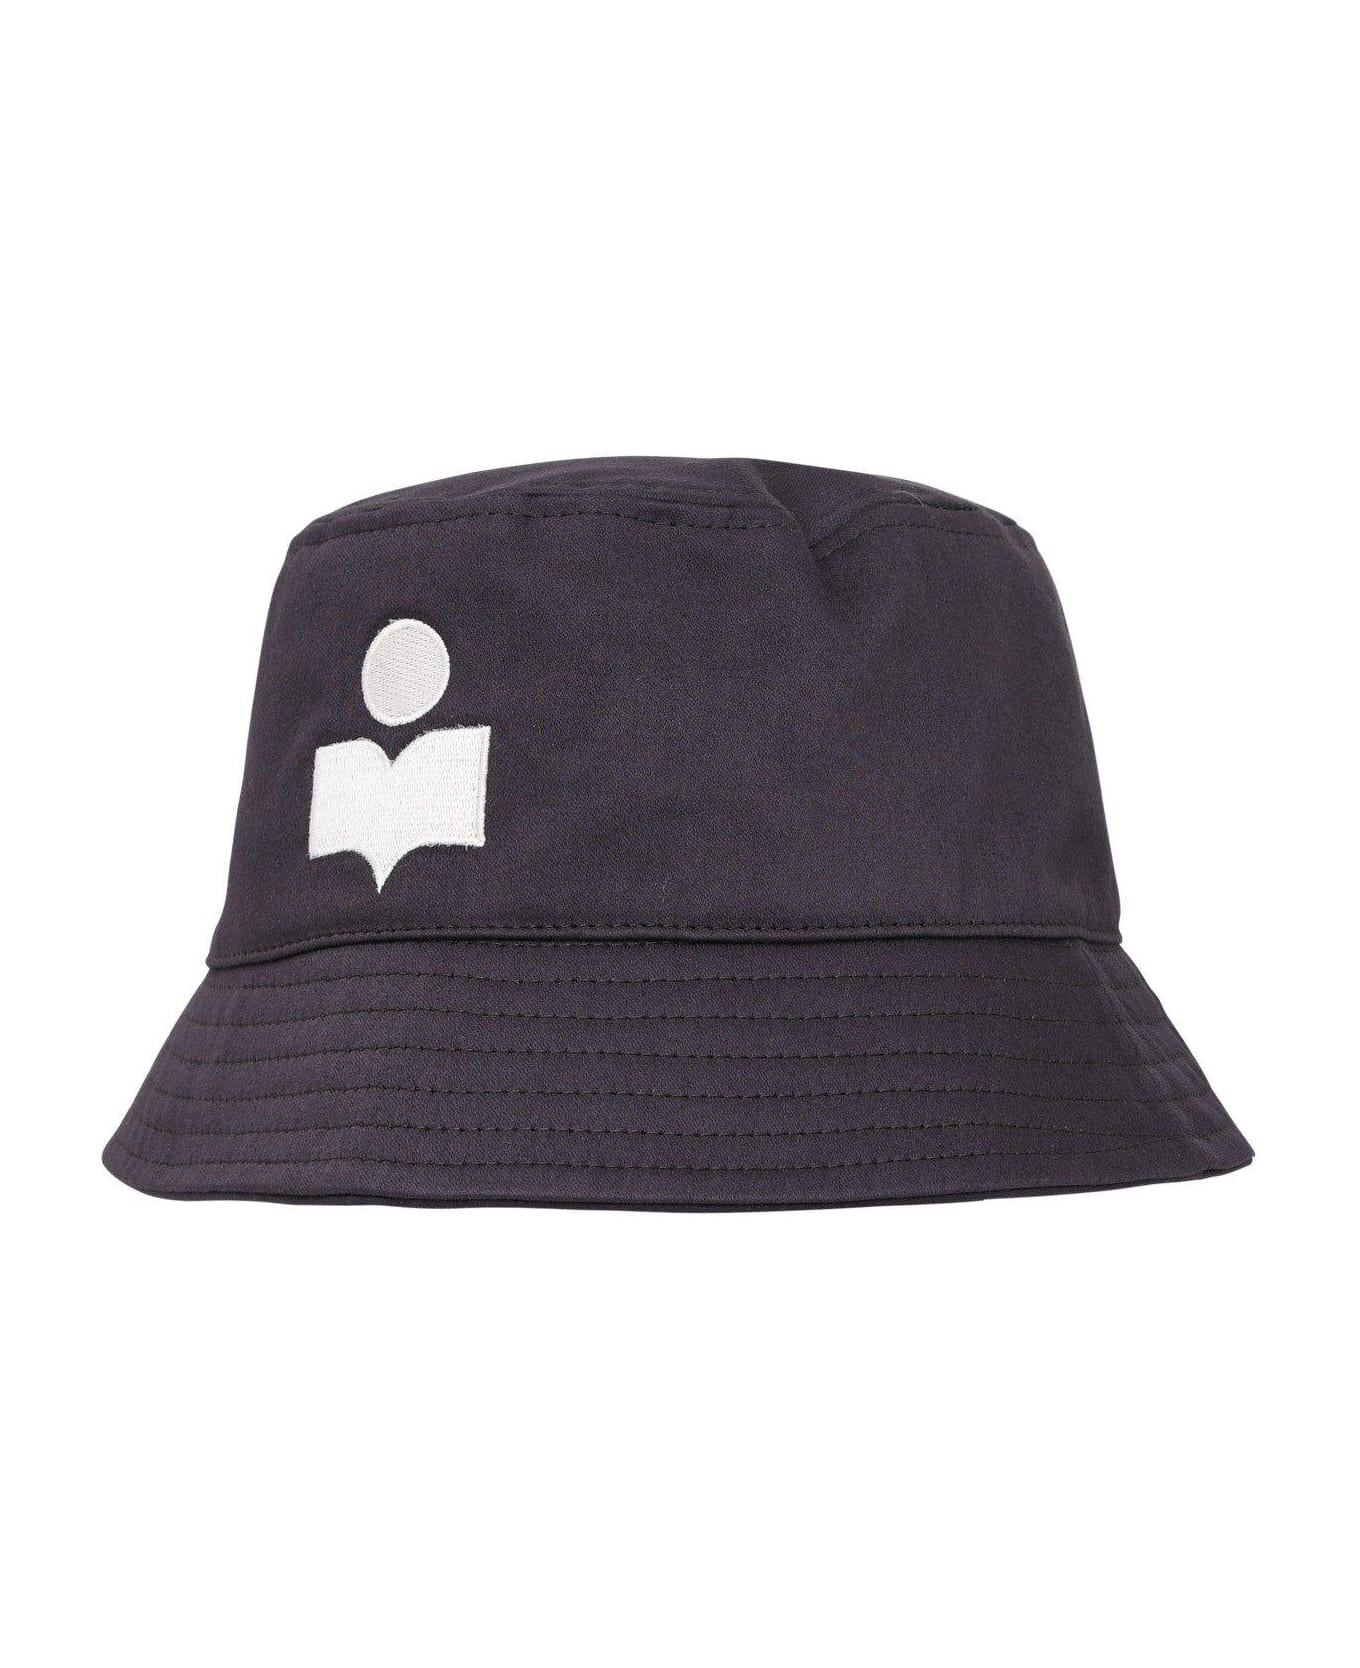 Accessories Hats Sun Hats Isabel Marant Sun Hat black casual look 